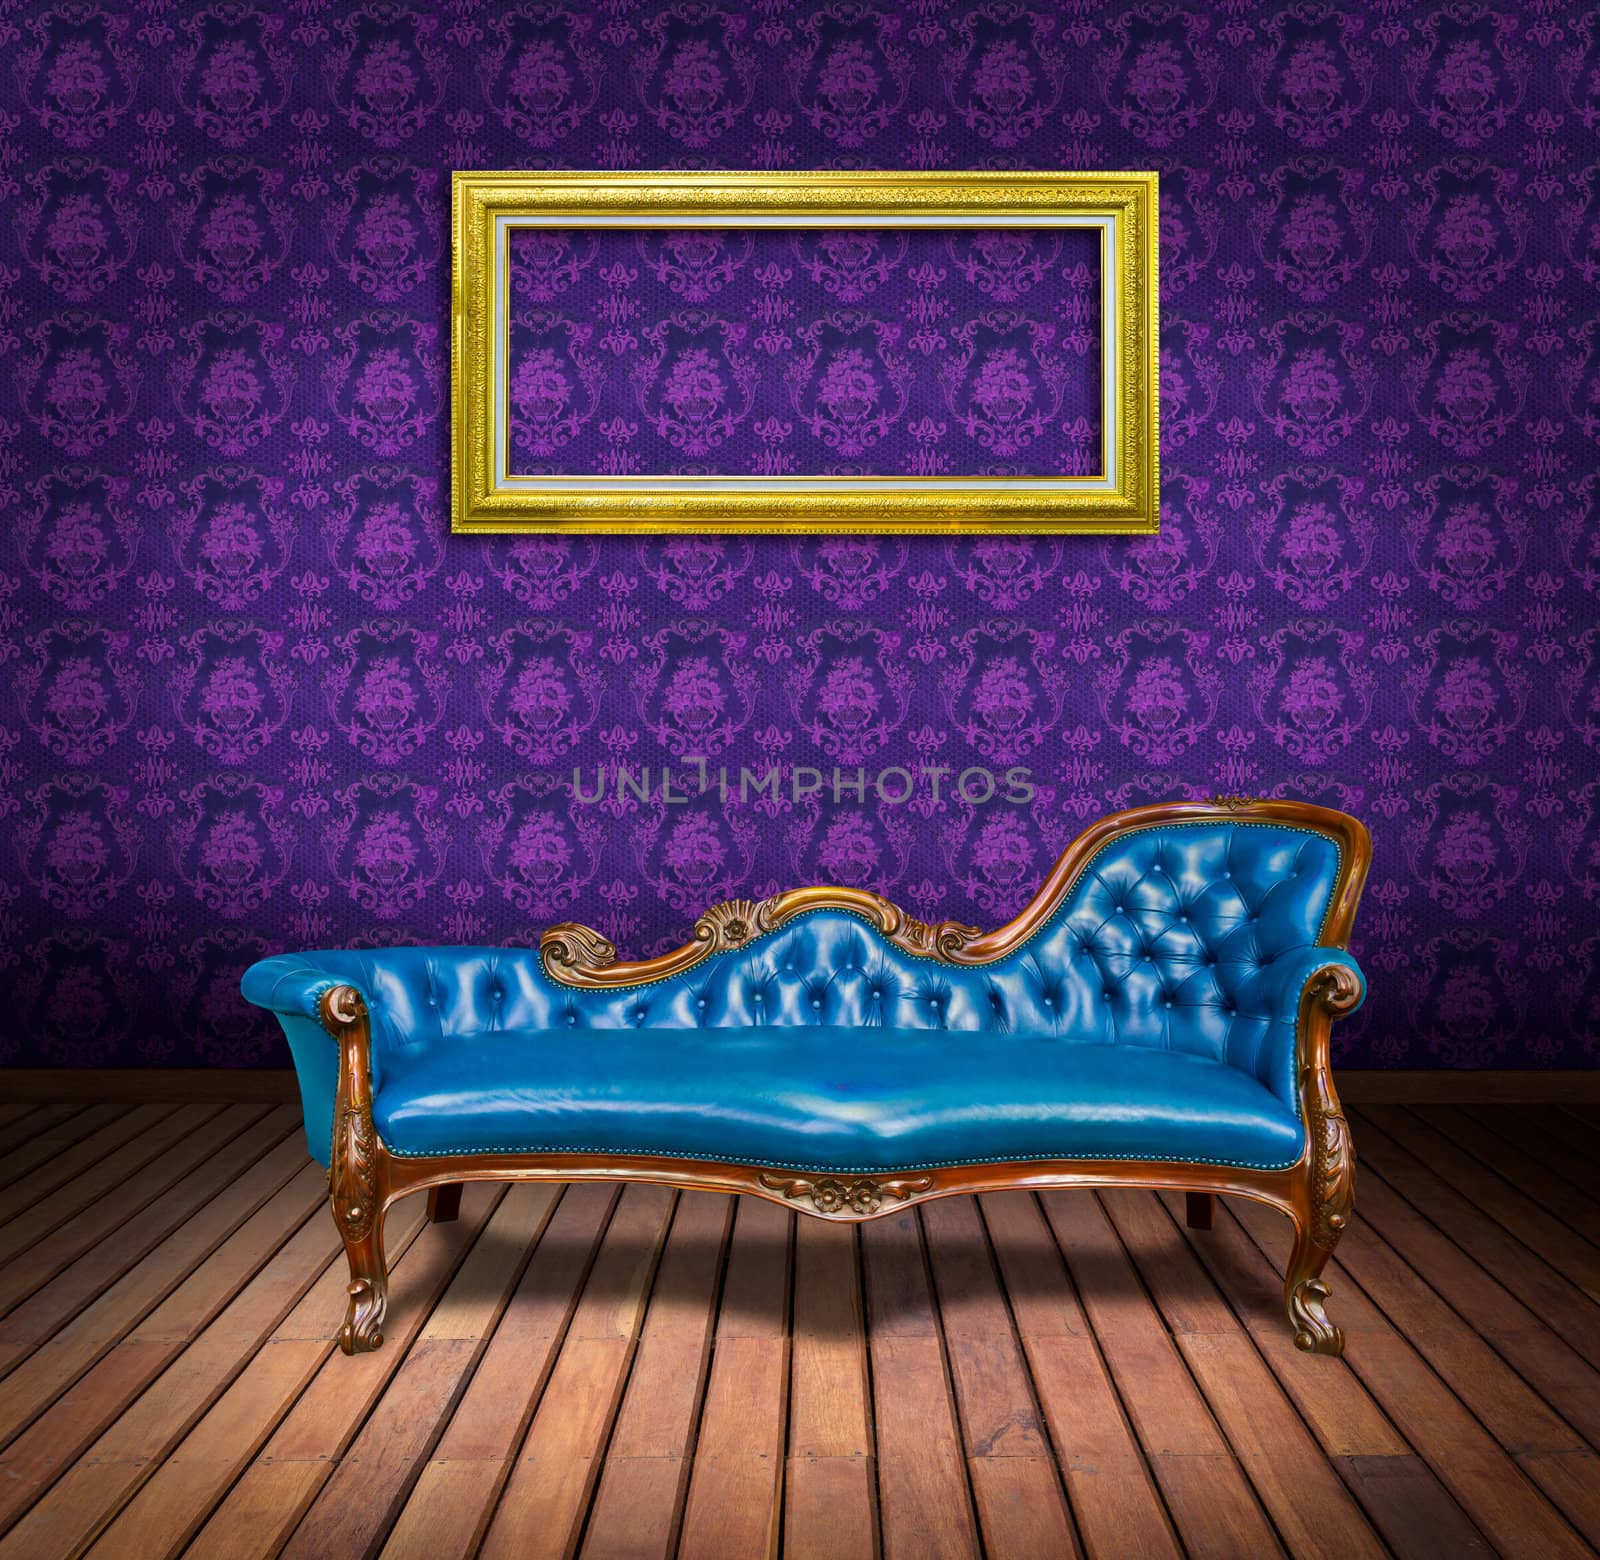 vintage luxury armchair and frame in purple wallpaper room